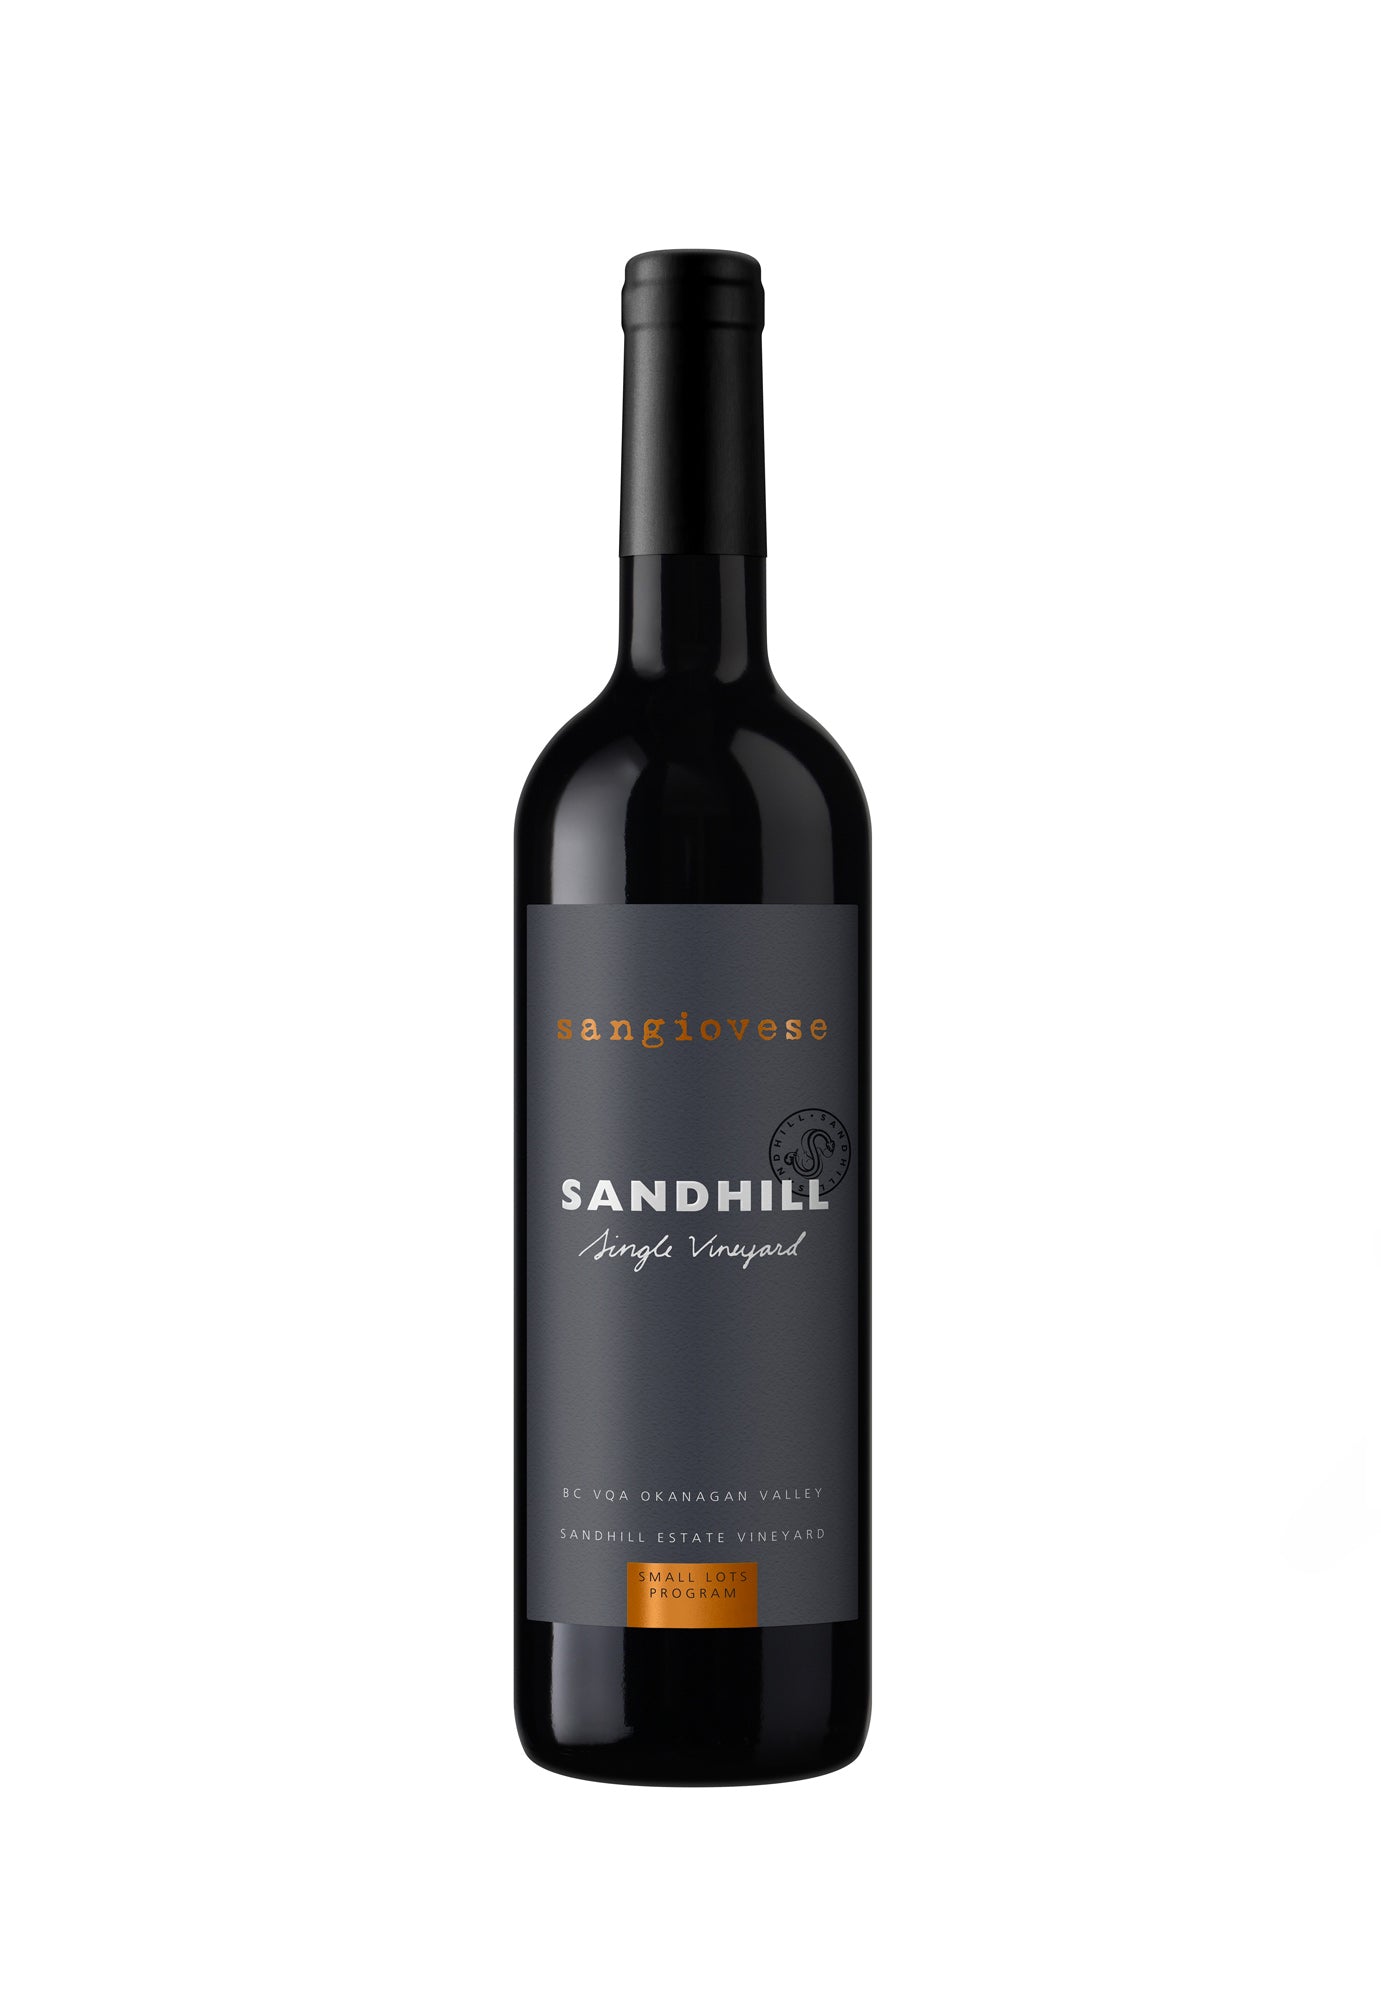 Sandhill Sangiovese "Small Lots" 2018